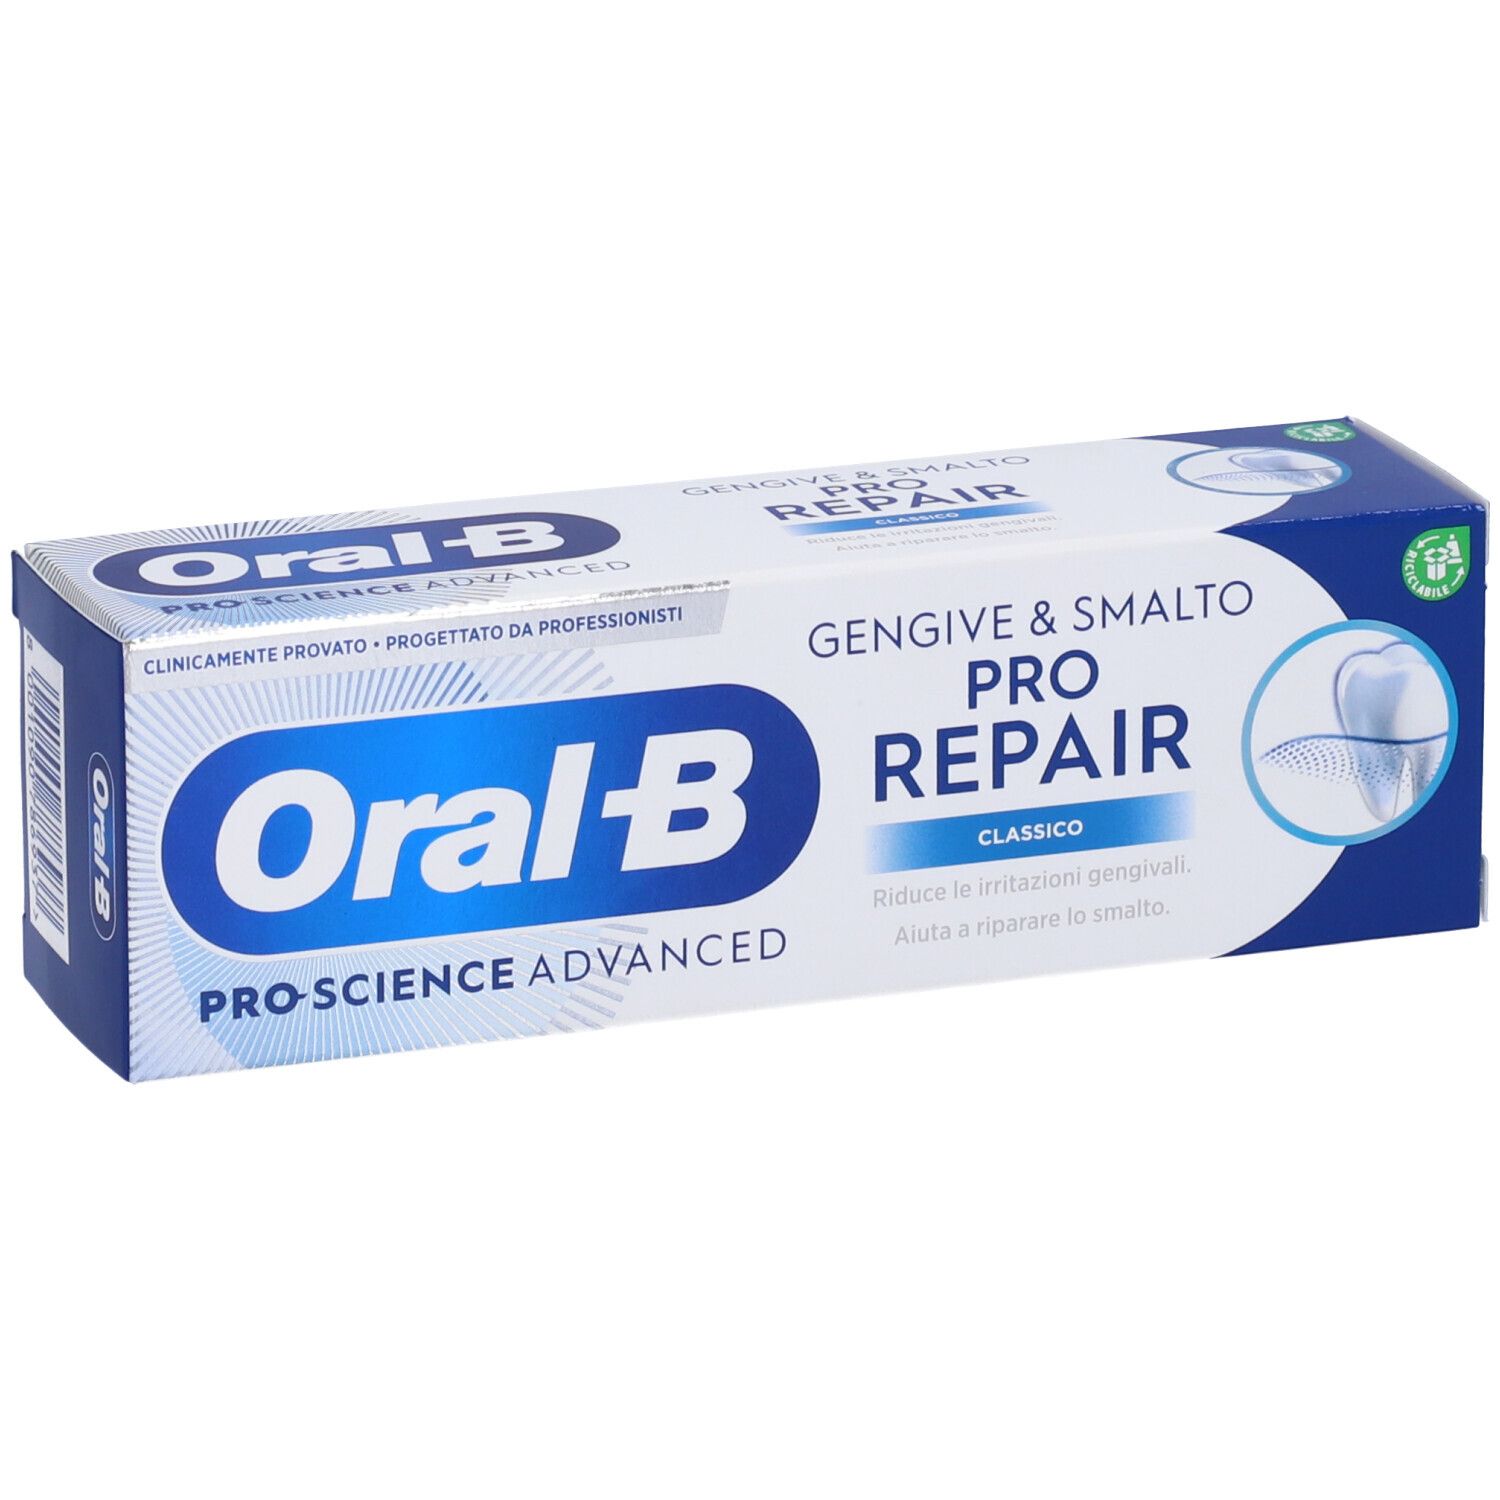 Oral-B Professional Dentifricio Gengive & Smalto Pro-Repair